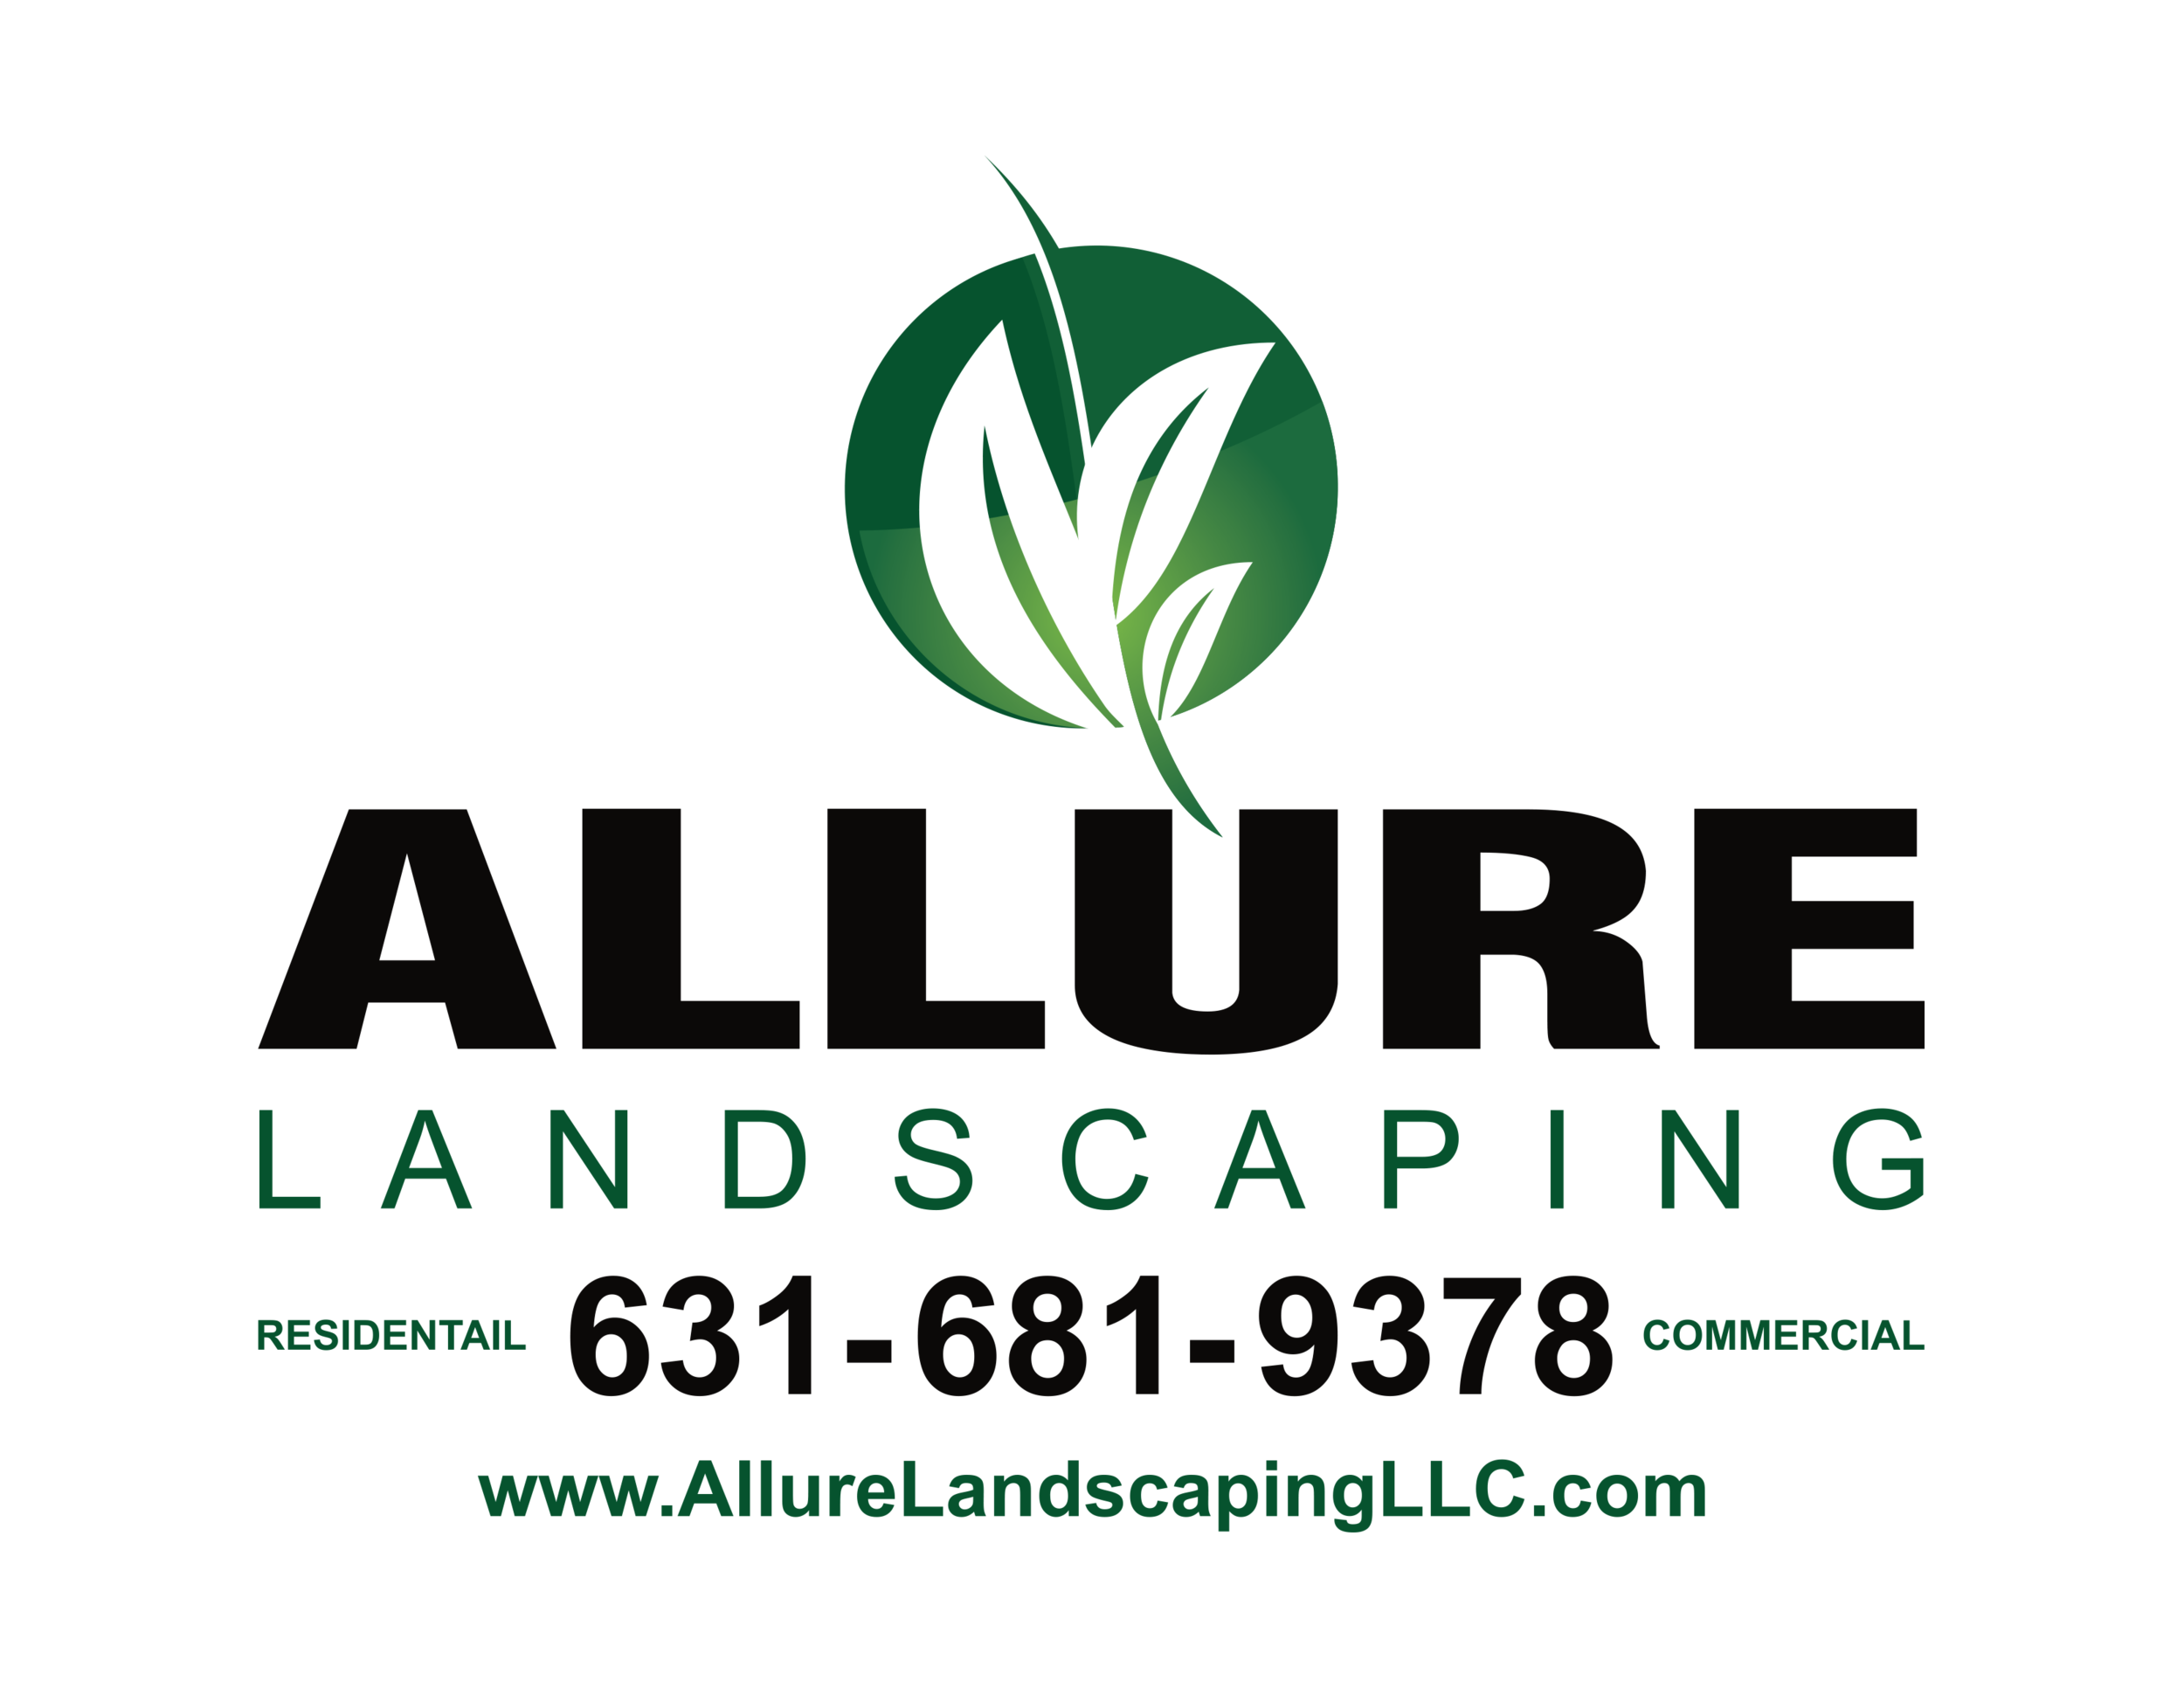 Allure Landscaping LLC